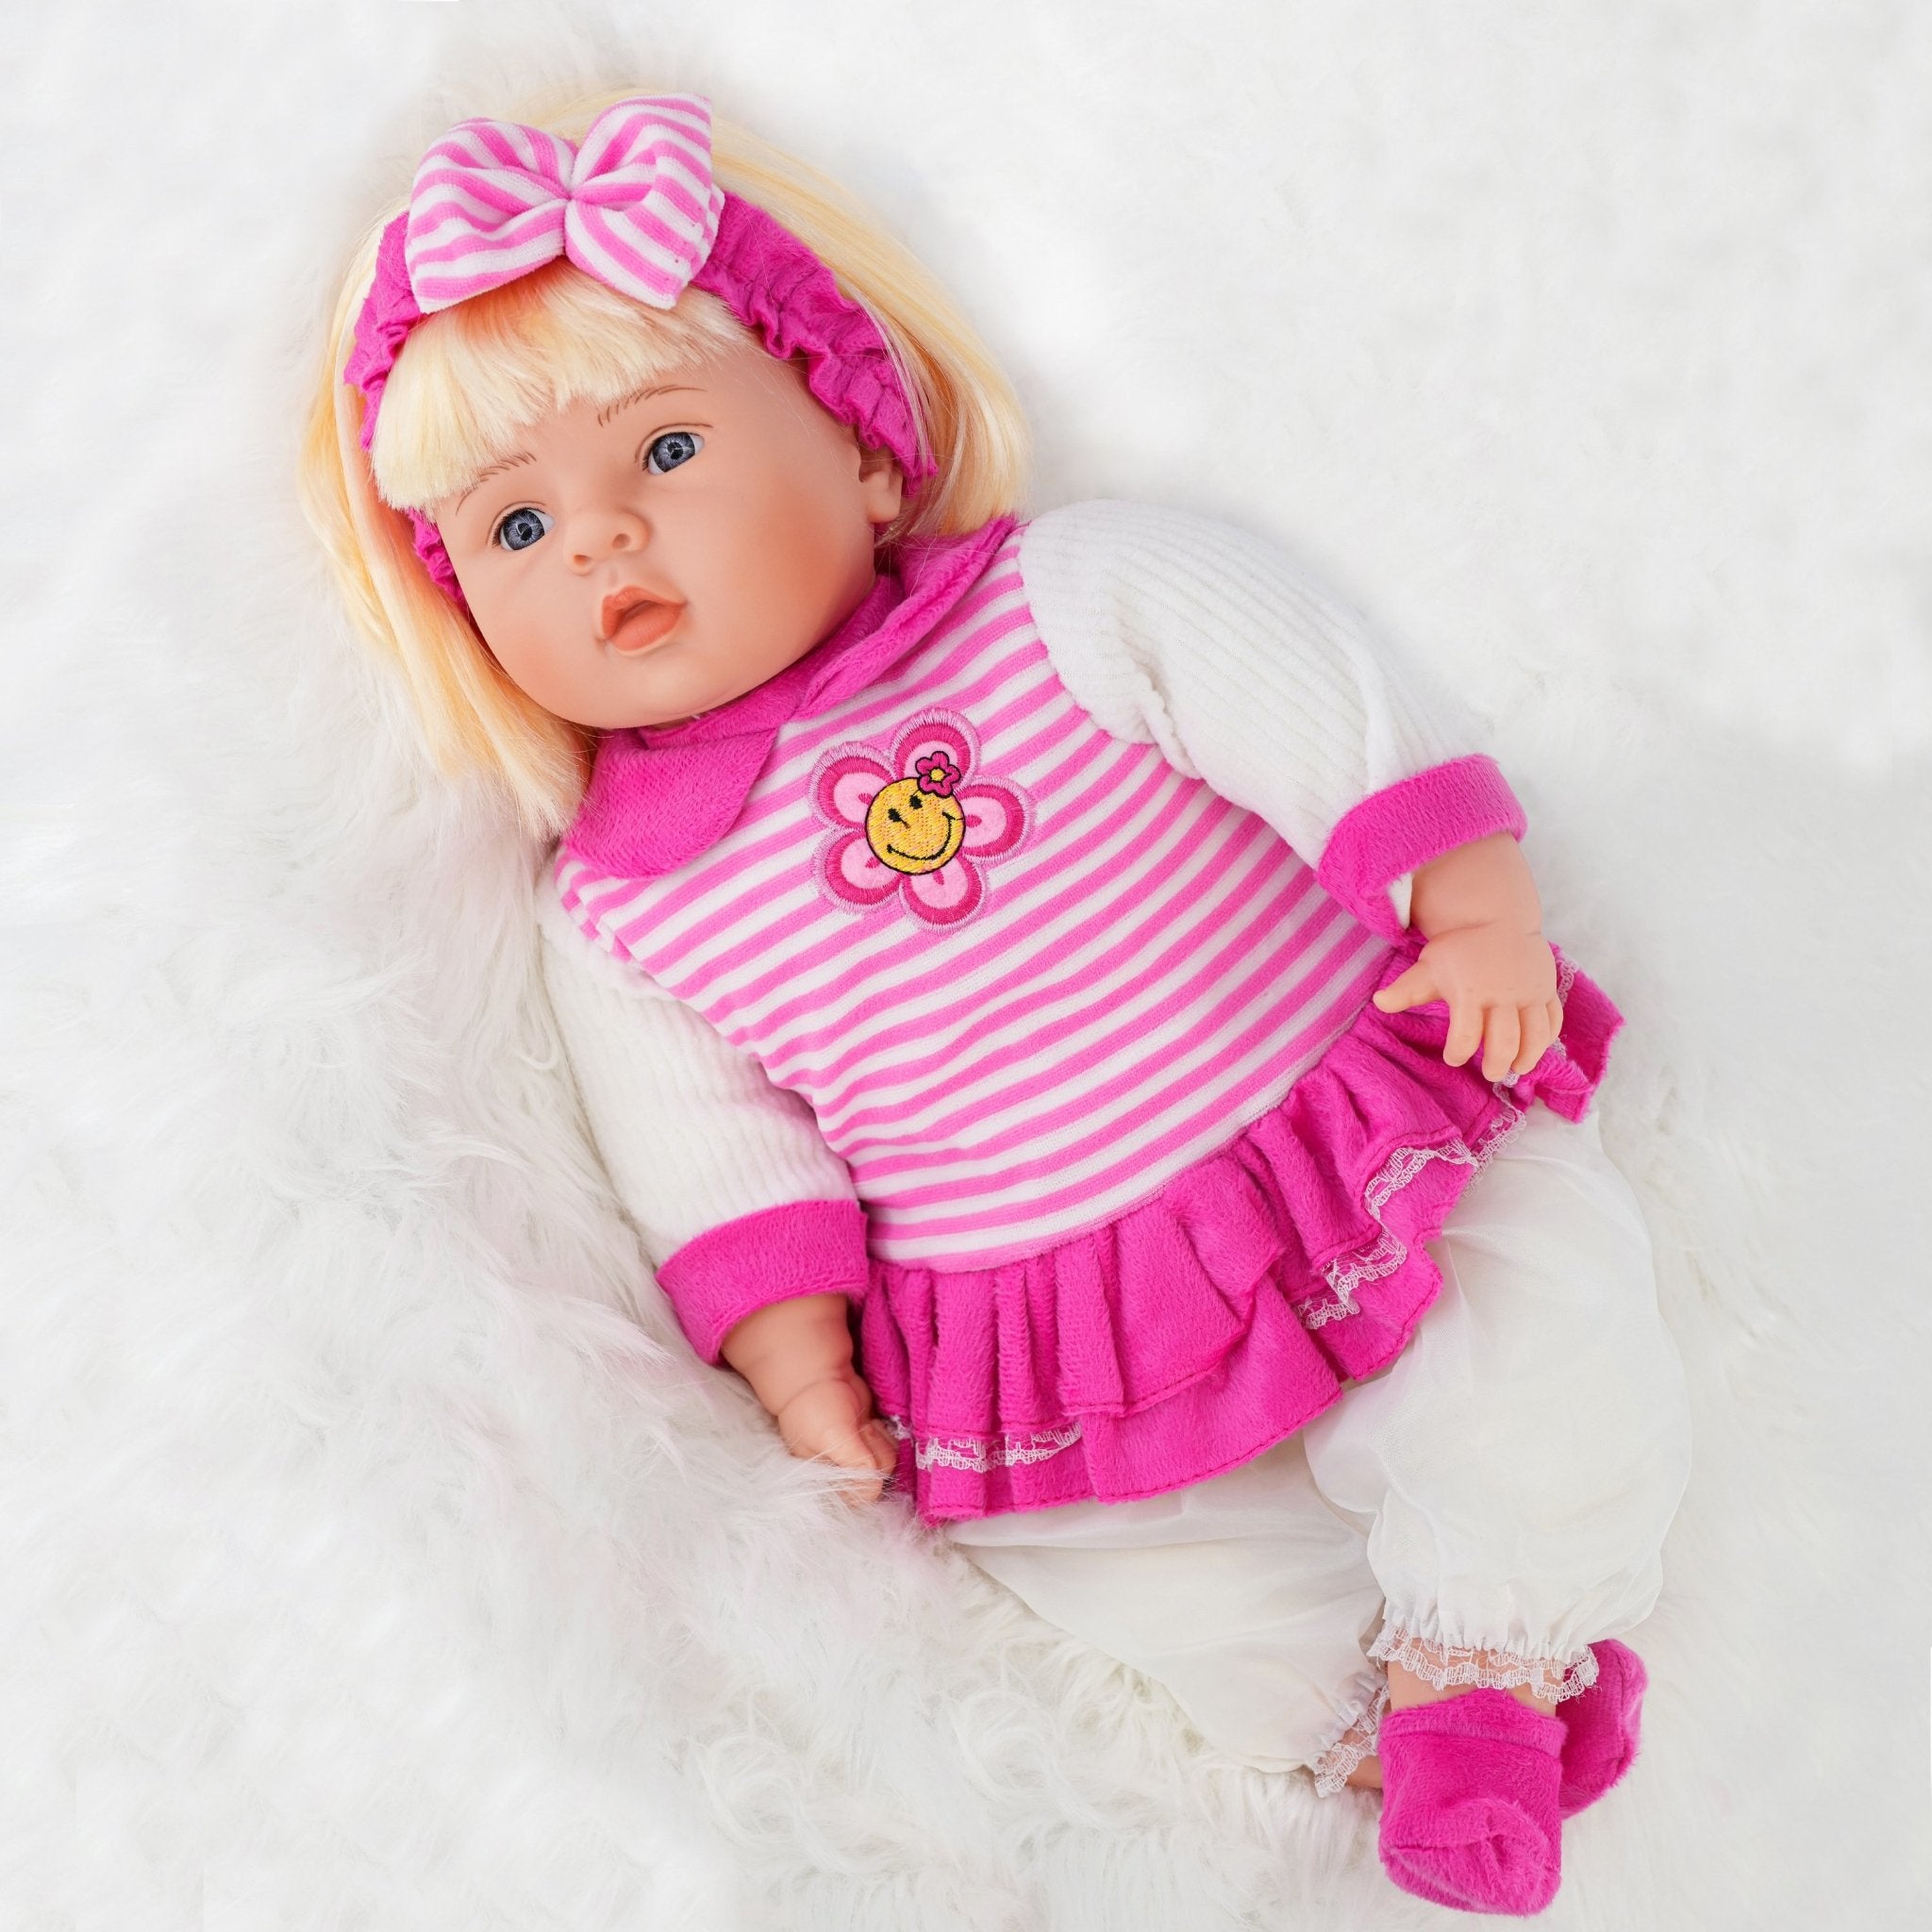 24" Chubby Face Baby Doll BiBi Doll - The Magic Toy Shop